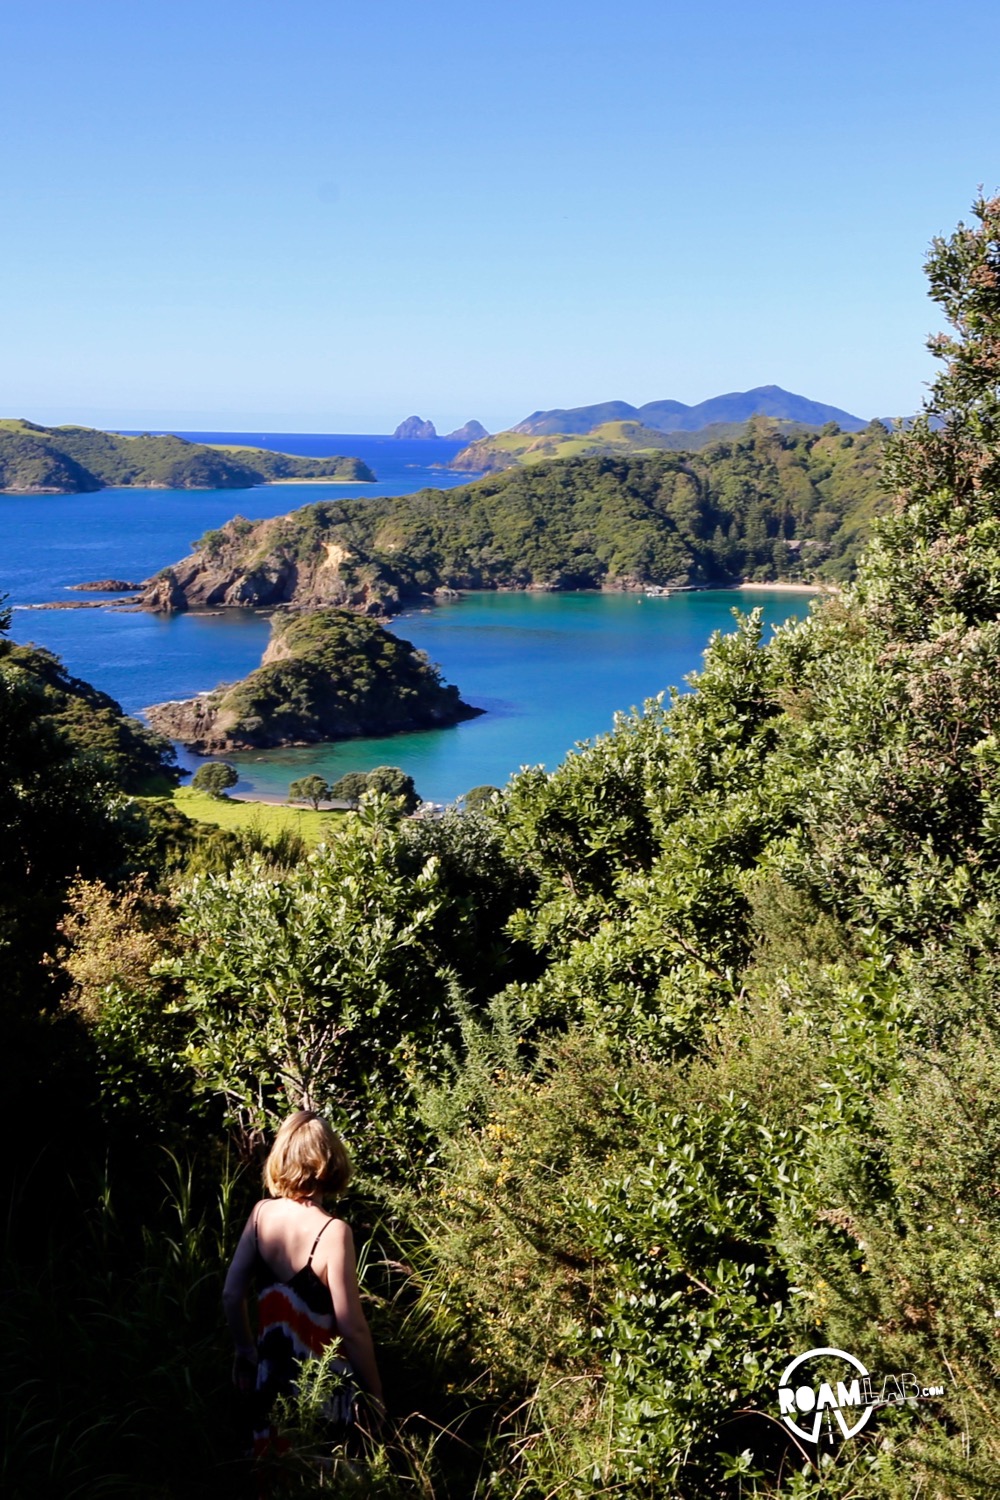 Back around Cape Brett and Motu Kōkako to hike Moturua Island and anchor in Paradise Bay, Urupukapuka Island in the Bay of Islands, New Zealand.